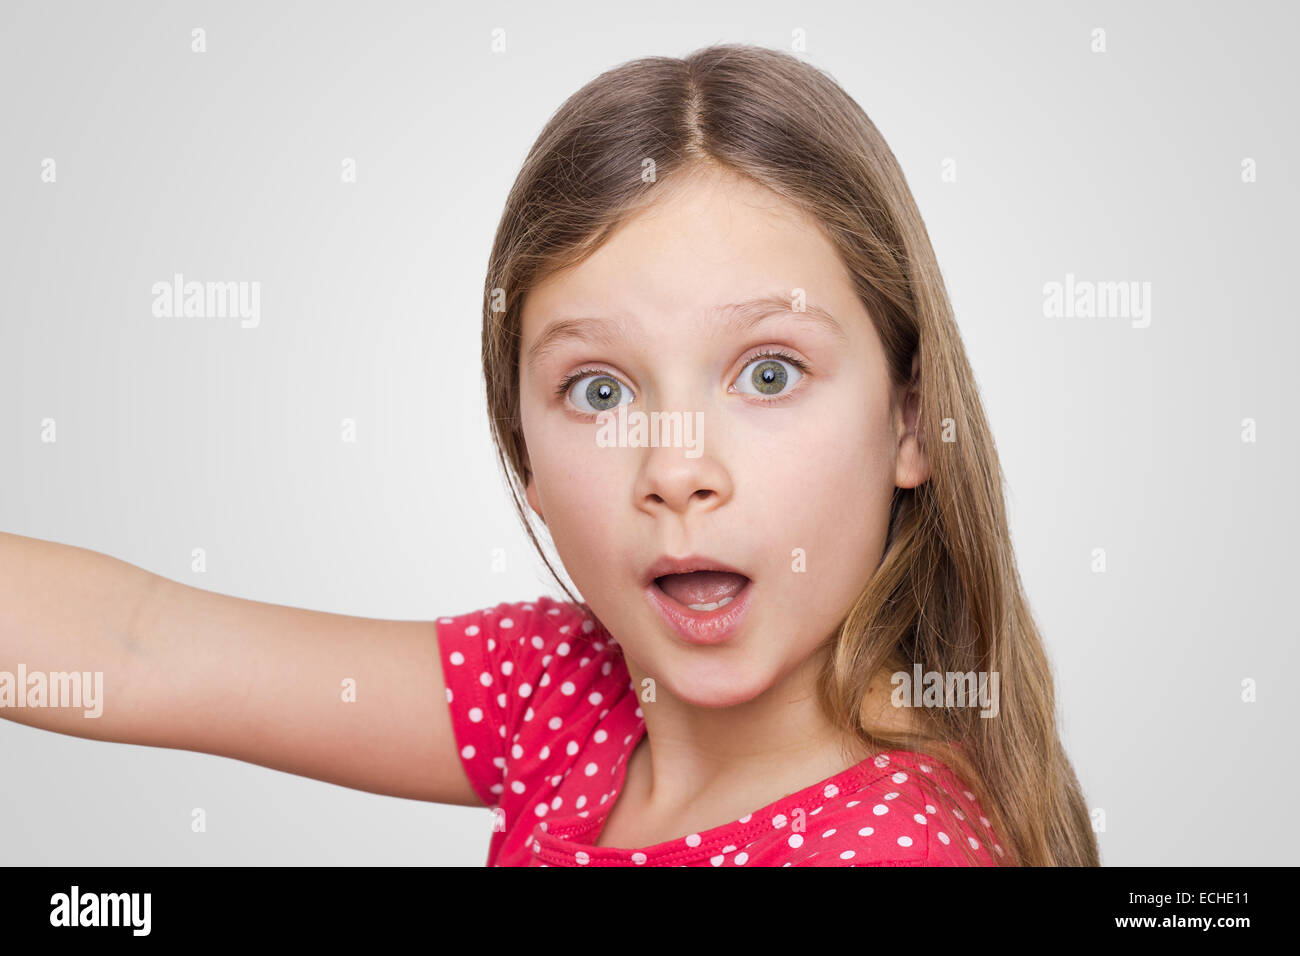 surprised girl Stock Photo